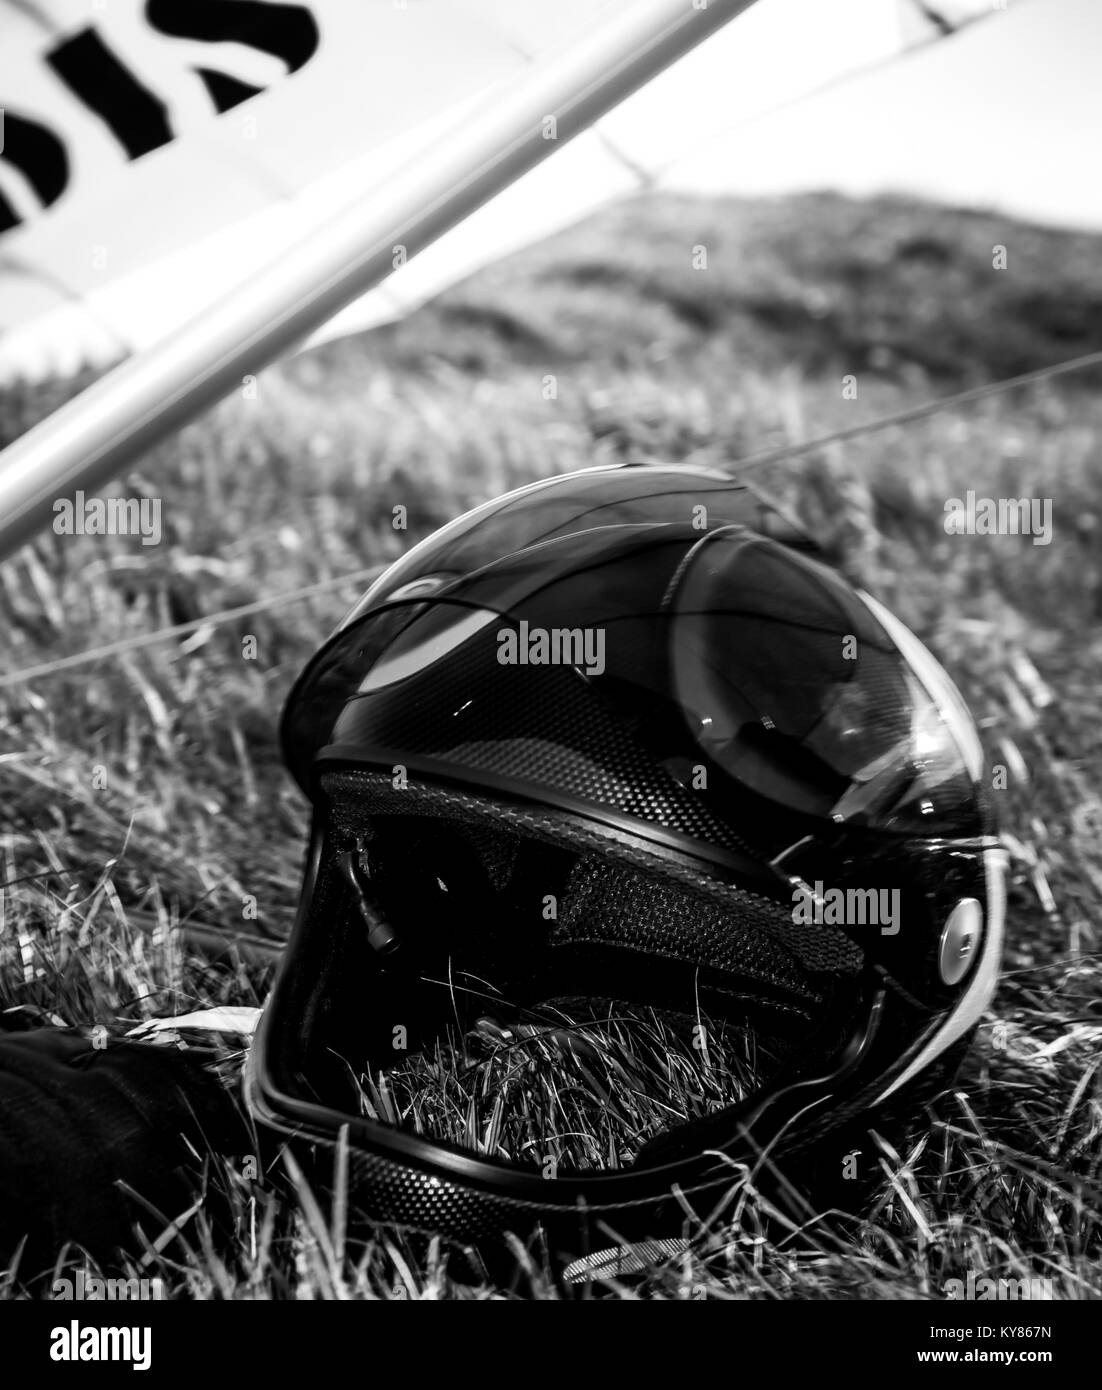 Hang gliders helmet on grass Stock Photo